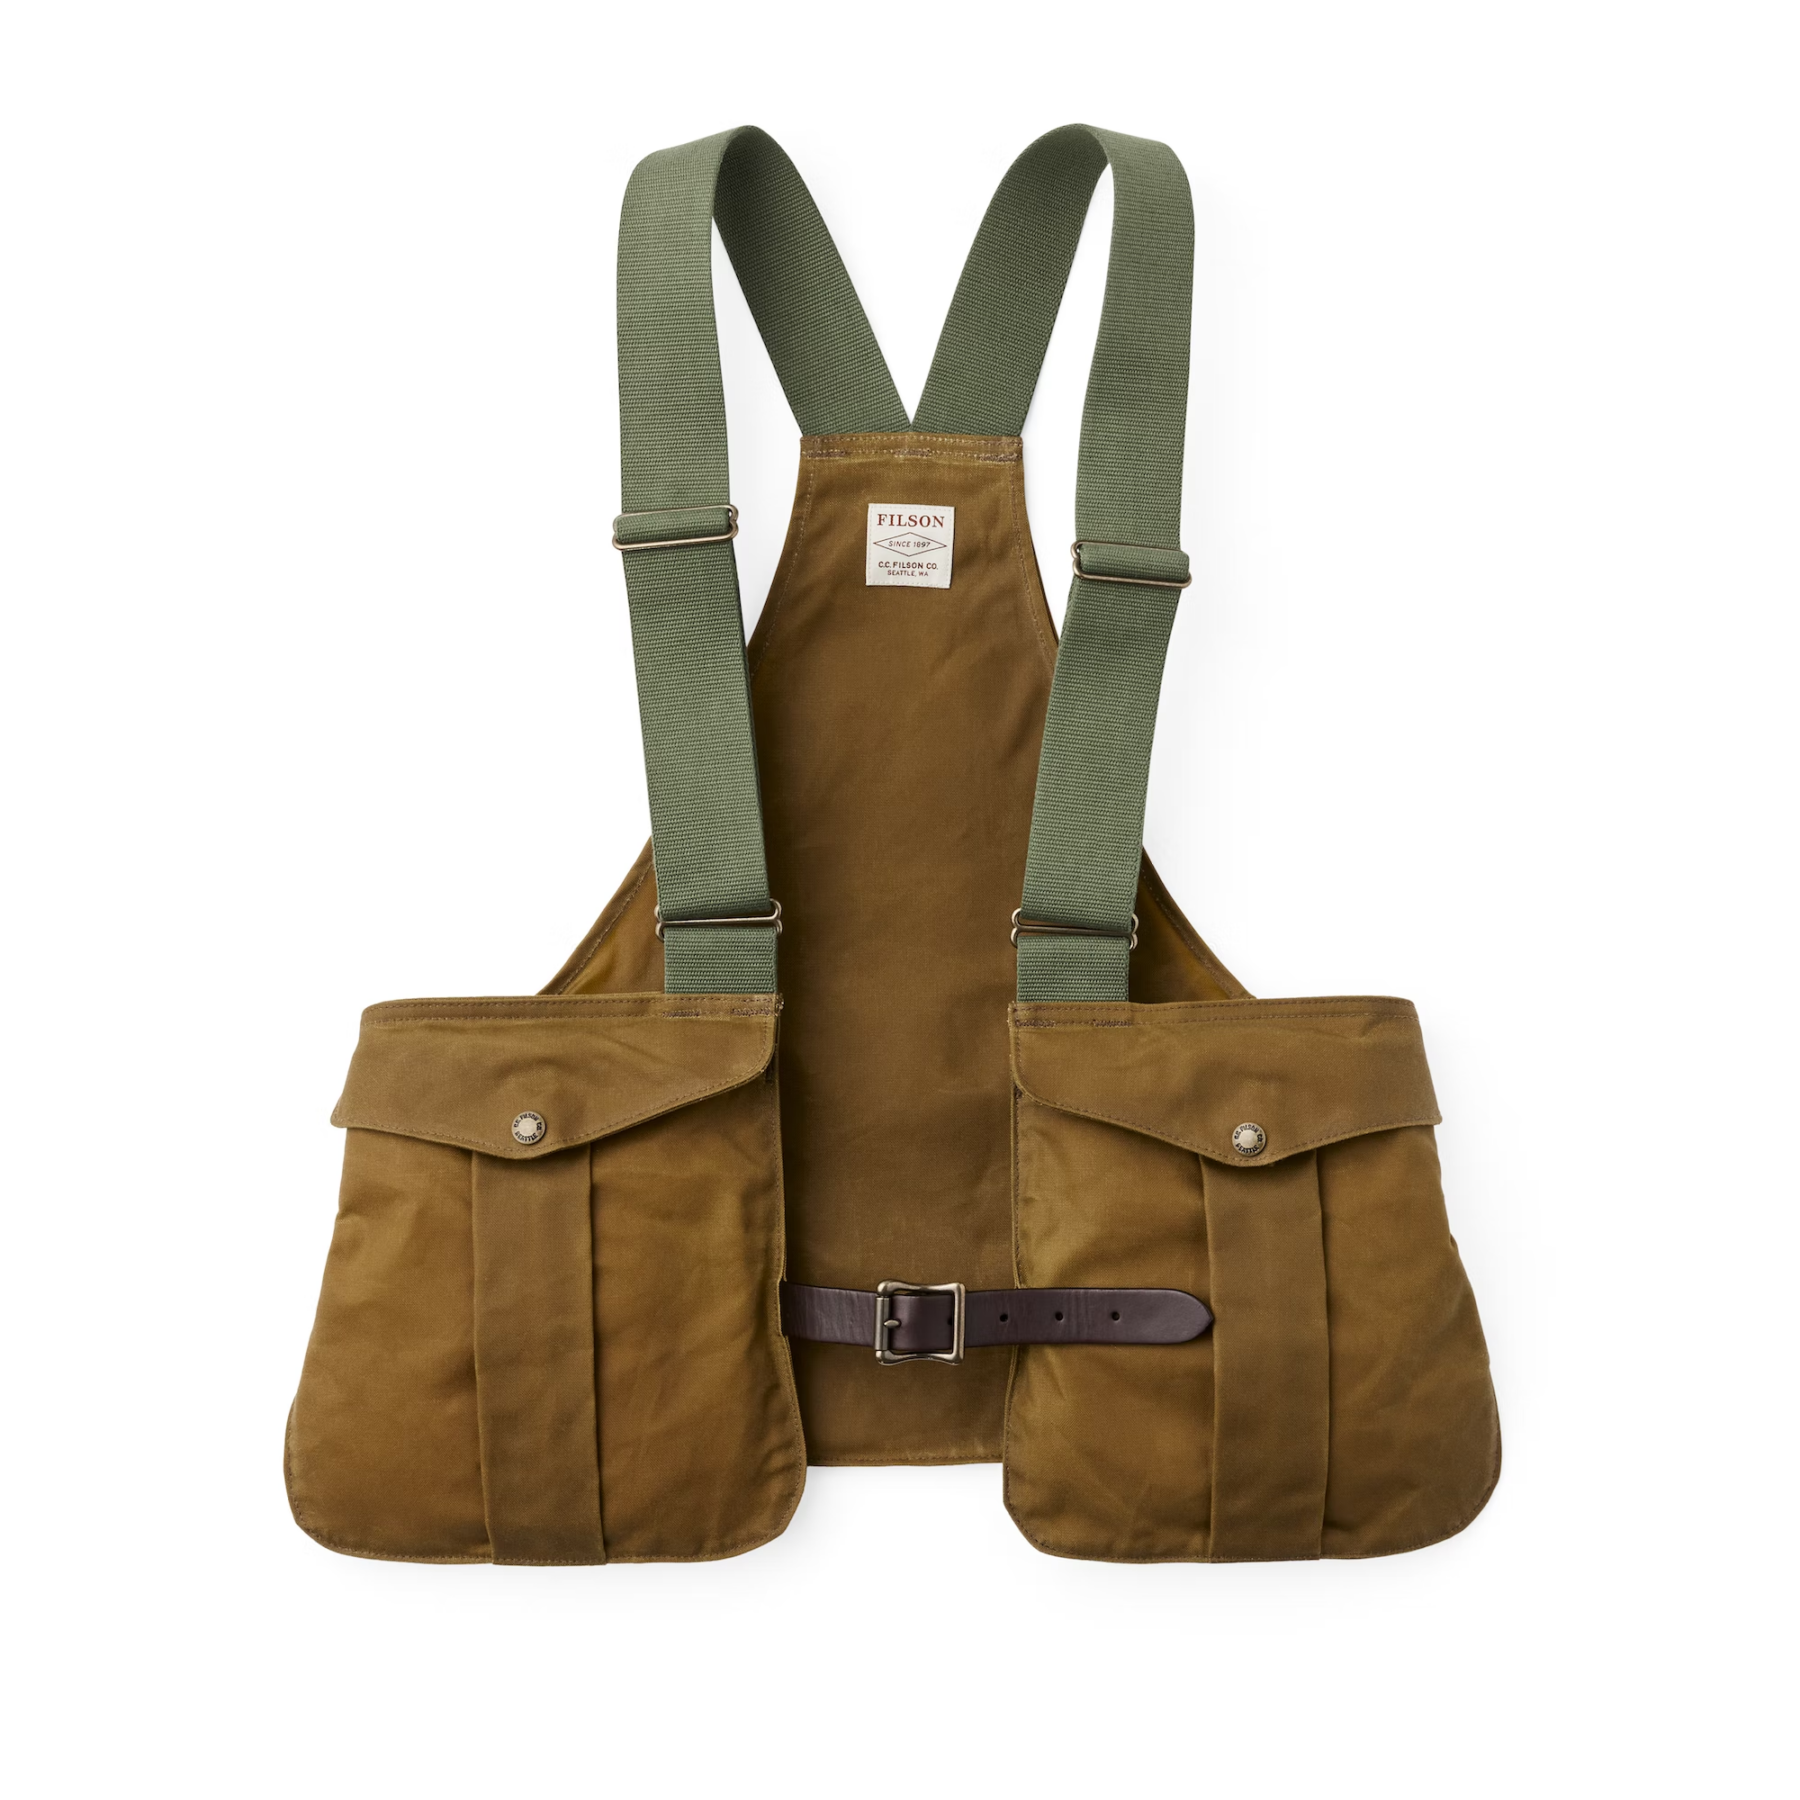 Review: Filson Tin Cloth Fishing Bag